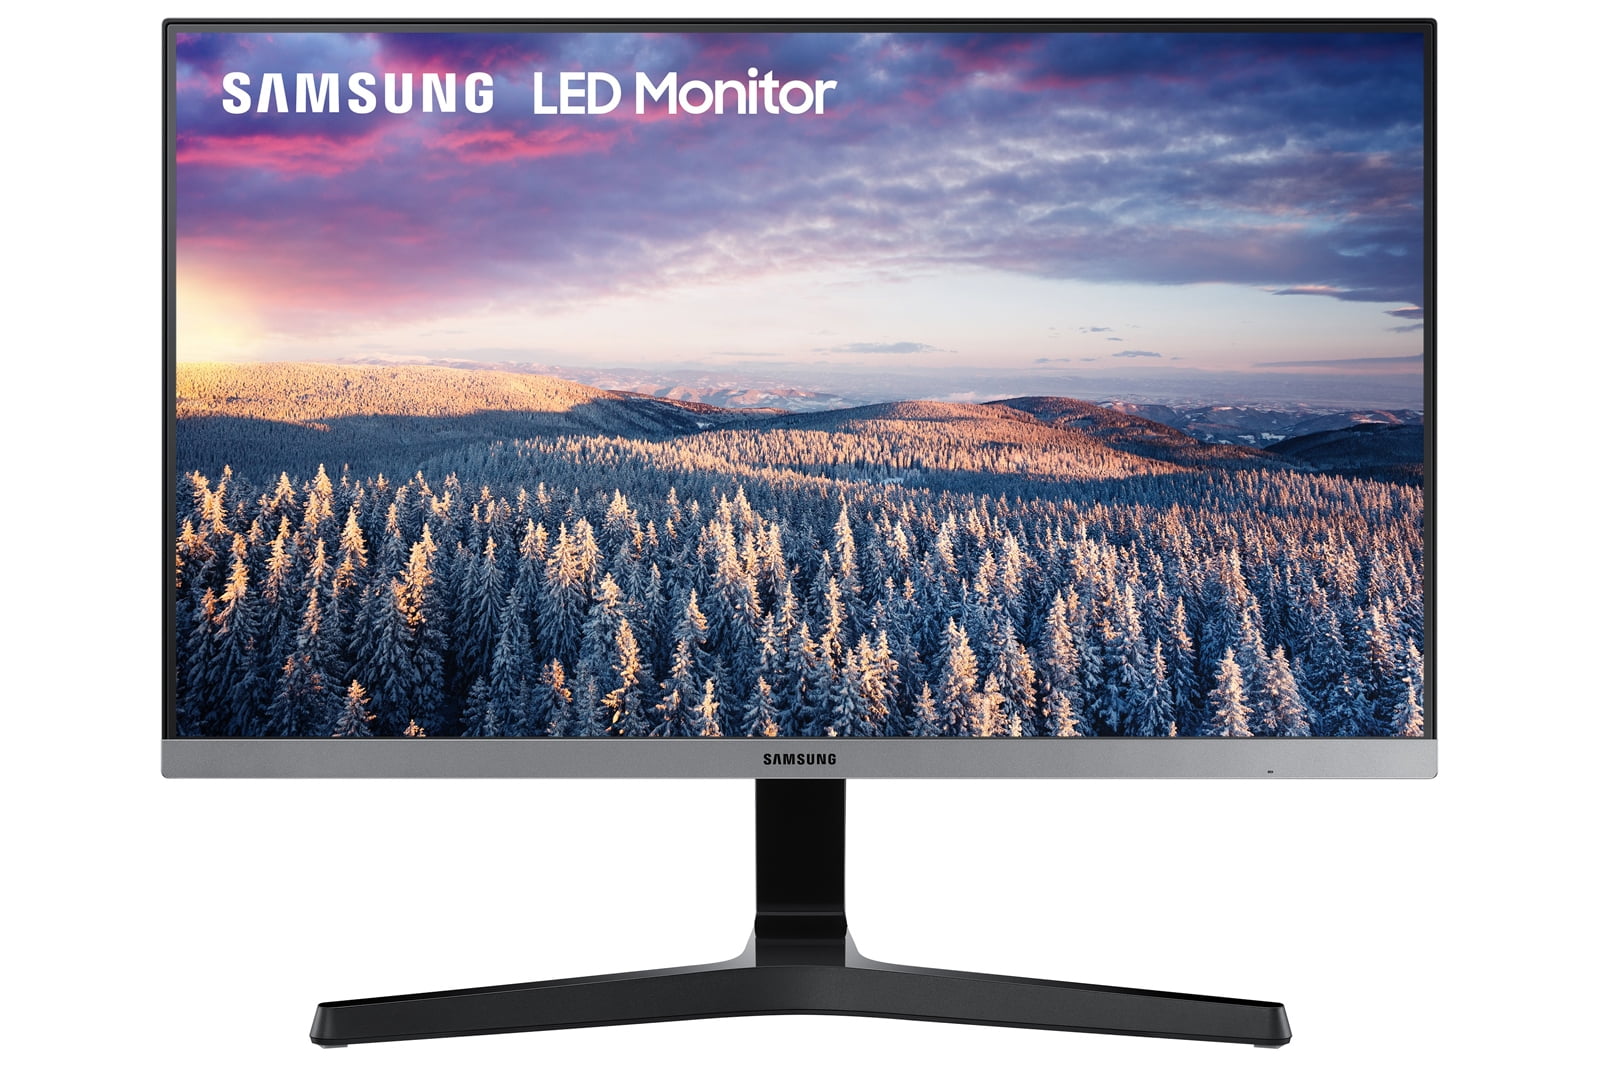 Samsung SE450 Series S24E450DL - LED monitor - 23.6